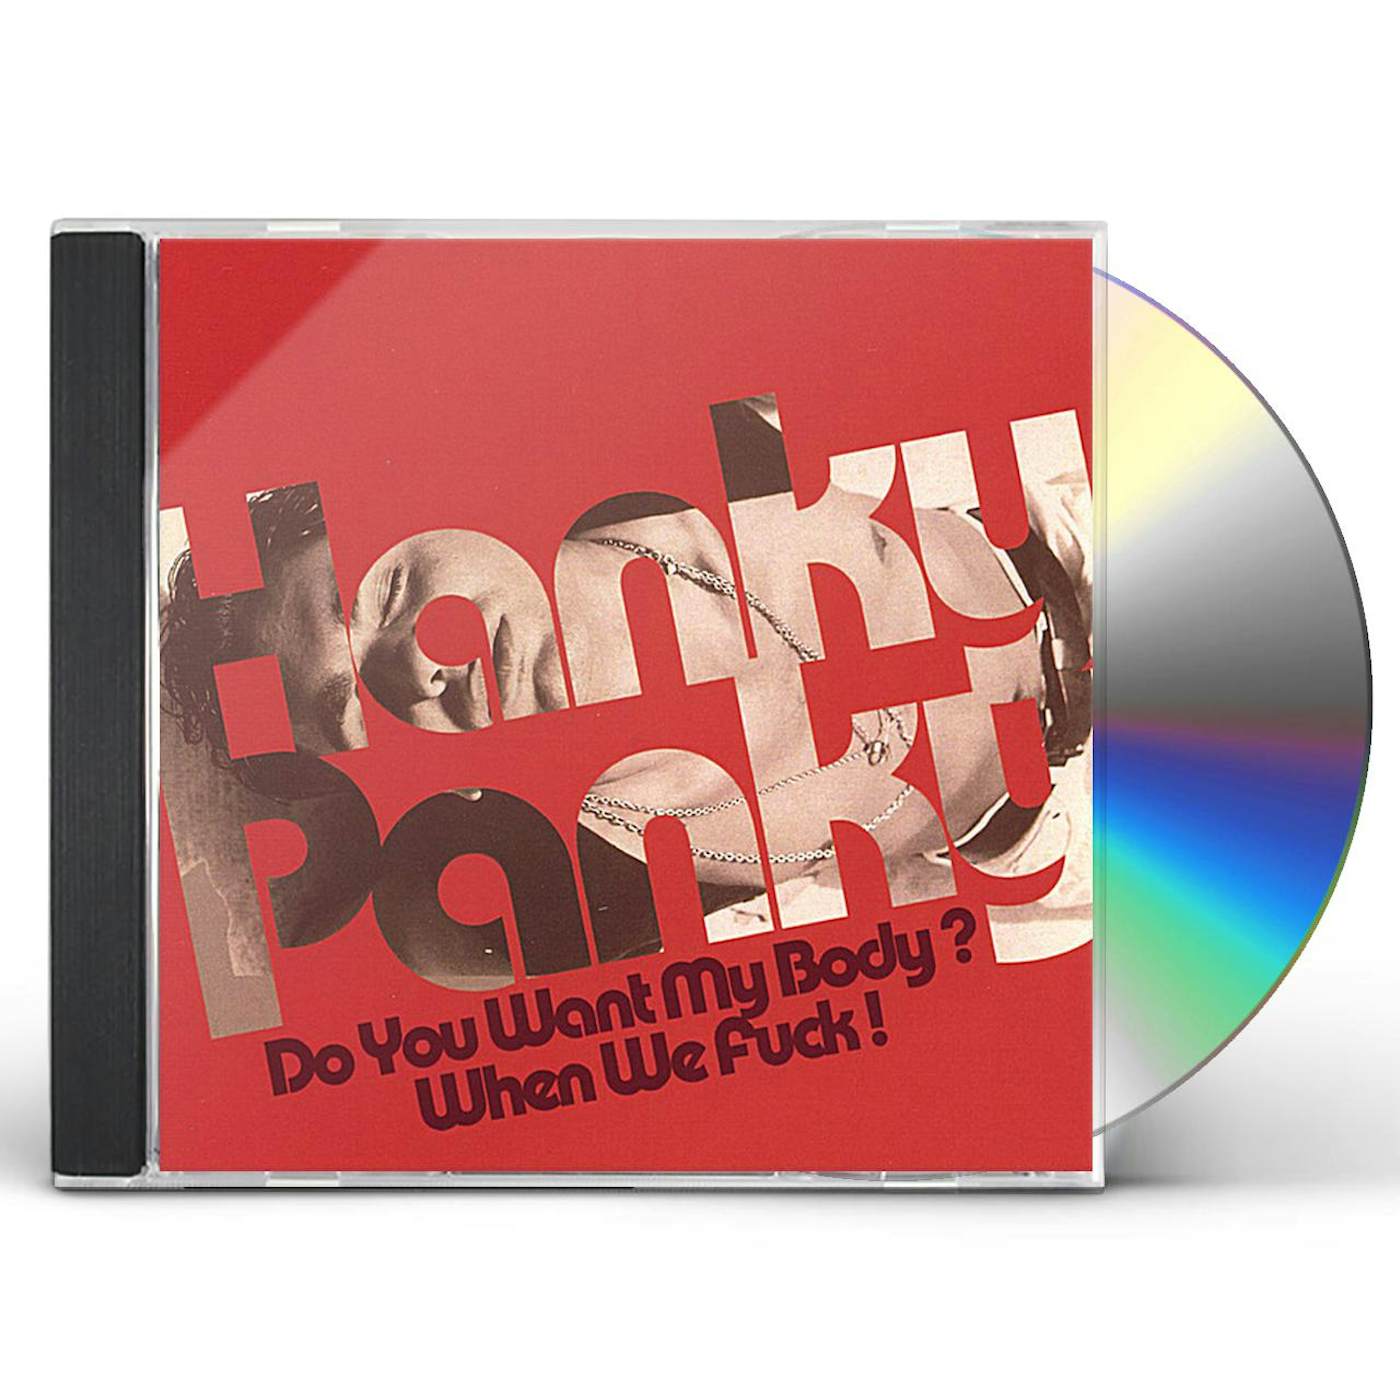 Hanky Panky DO YOU WANT MY BODY? CD